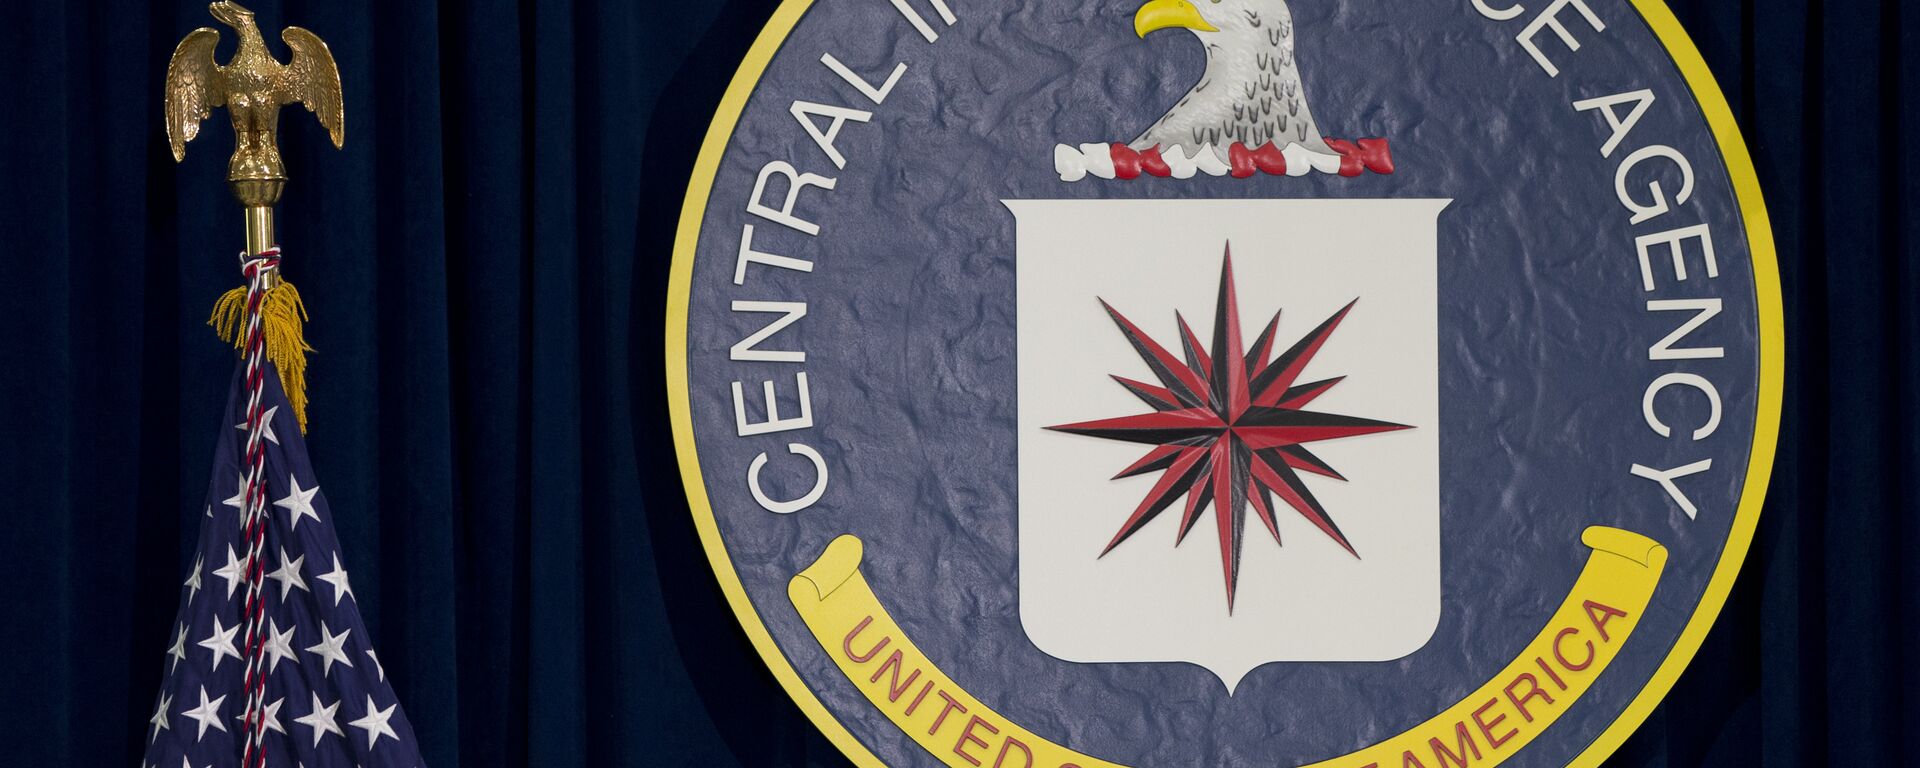 Logo Centralne obaveštajne agencije (CIA) i američka zastava - Sputnik Srbija, 1920, 13.08.2021